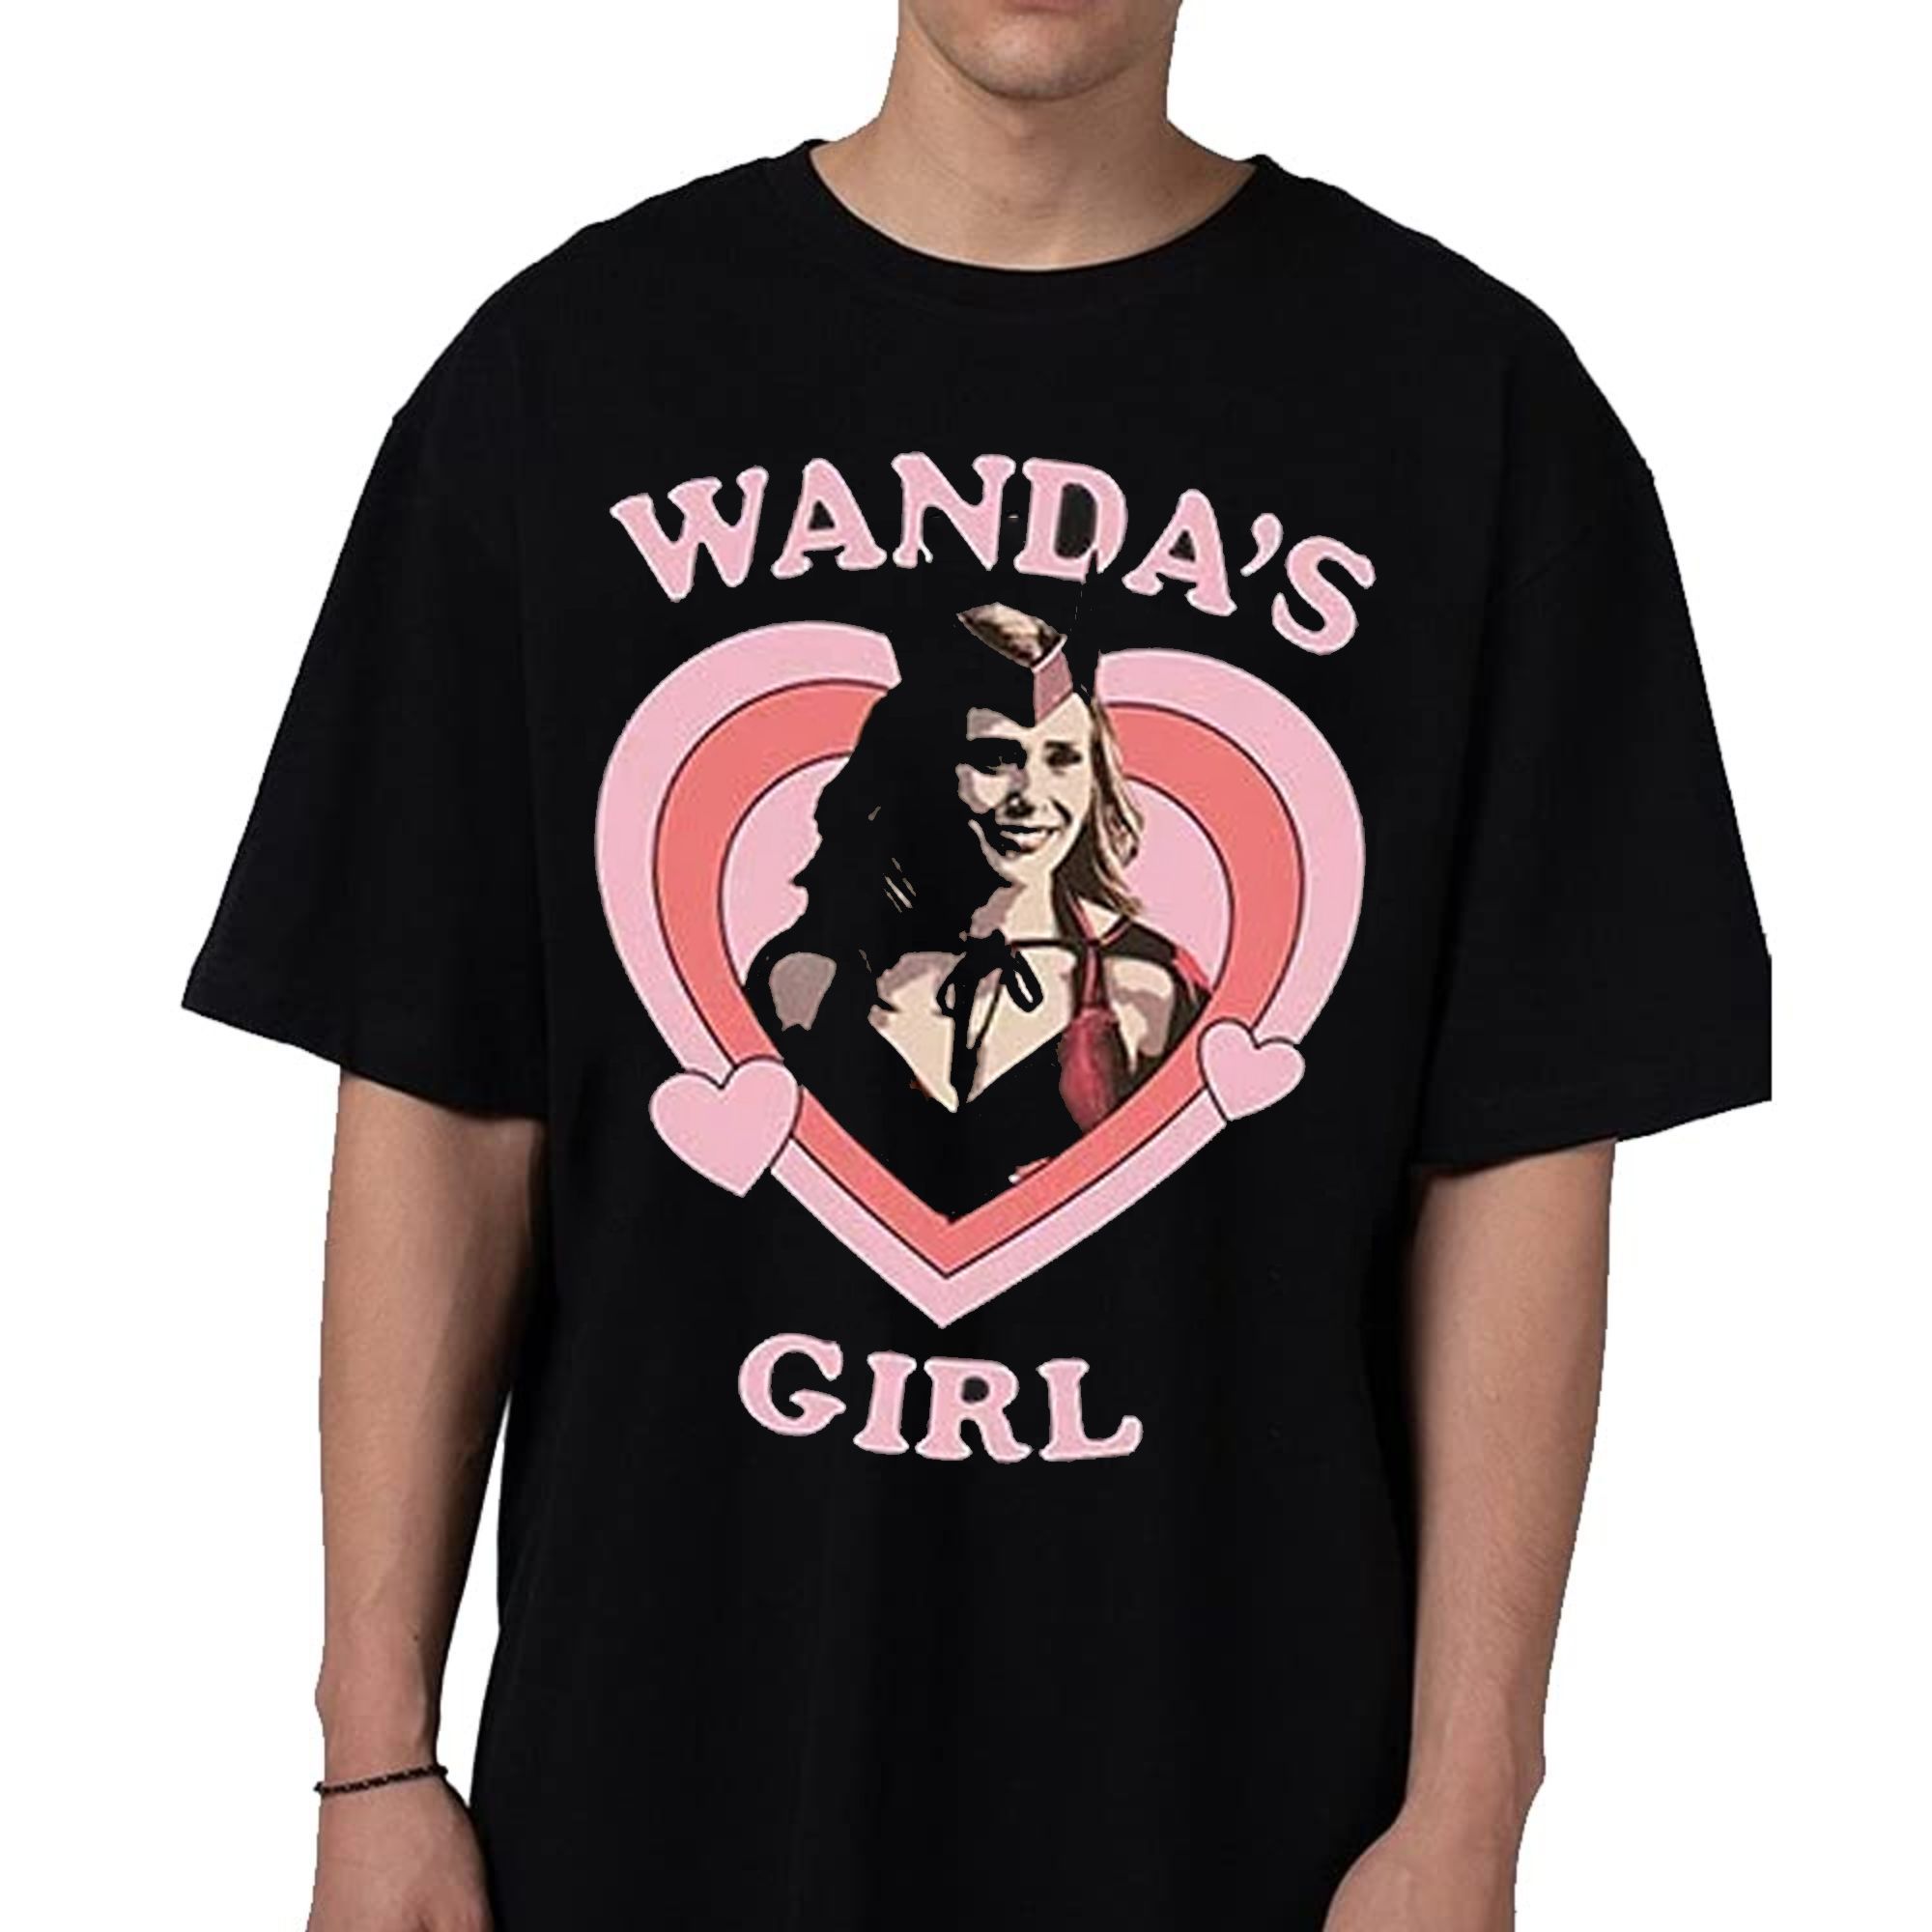 Et bestemt Beskrive Reorganisere Scarlet Witch Shirt, Wanda Maximoff T-Shirt, Wanda Vision T-Shirt, Homage T- Shirt, Elizabeth Olsen shirt, Marvel Shirt, Wanda's Girl